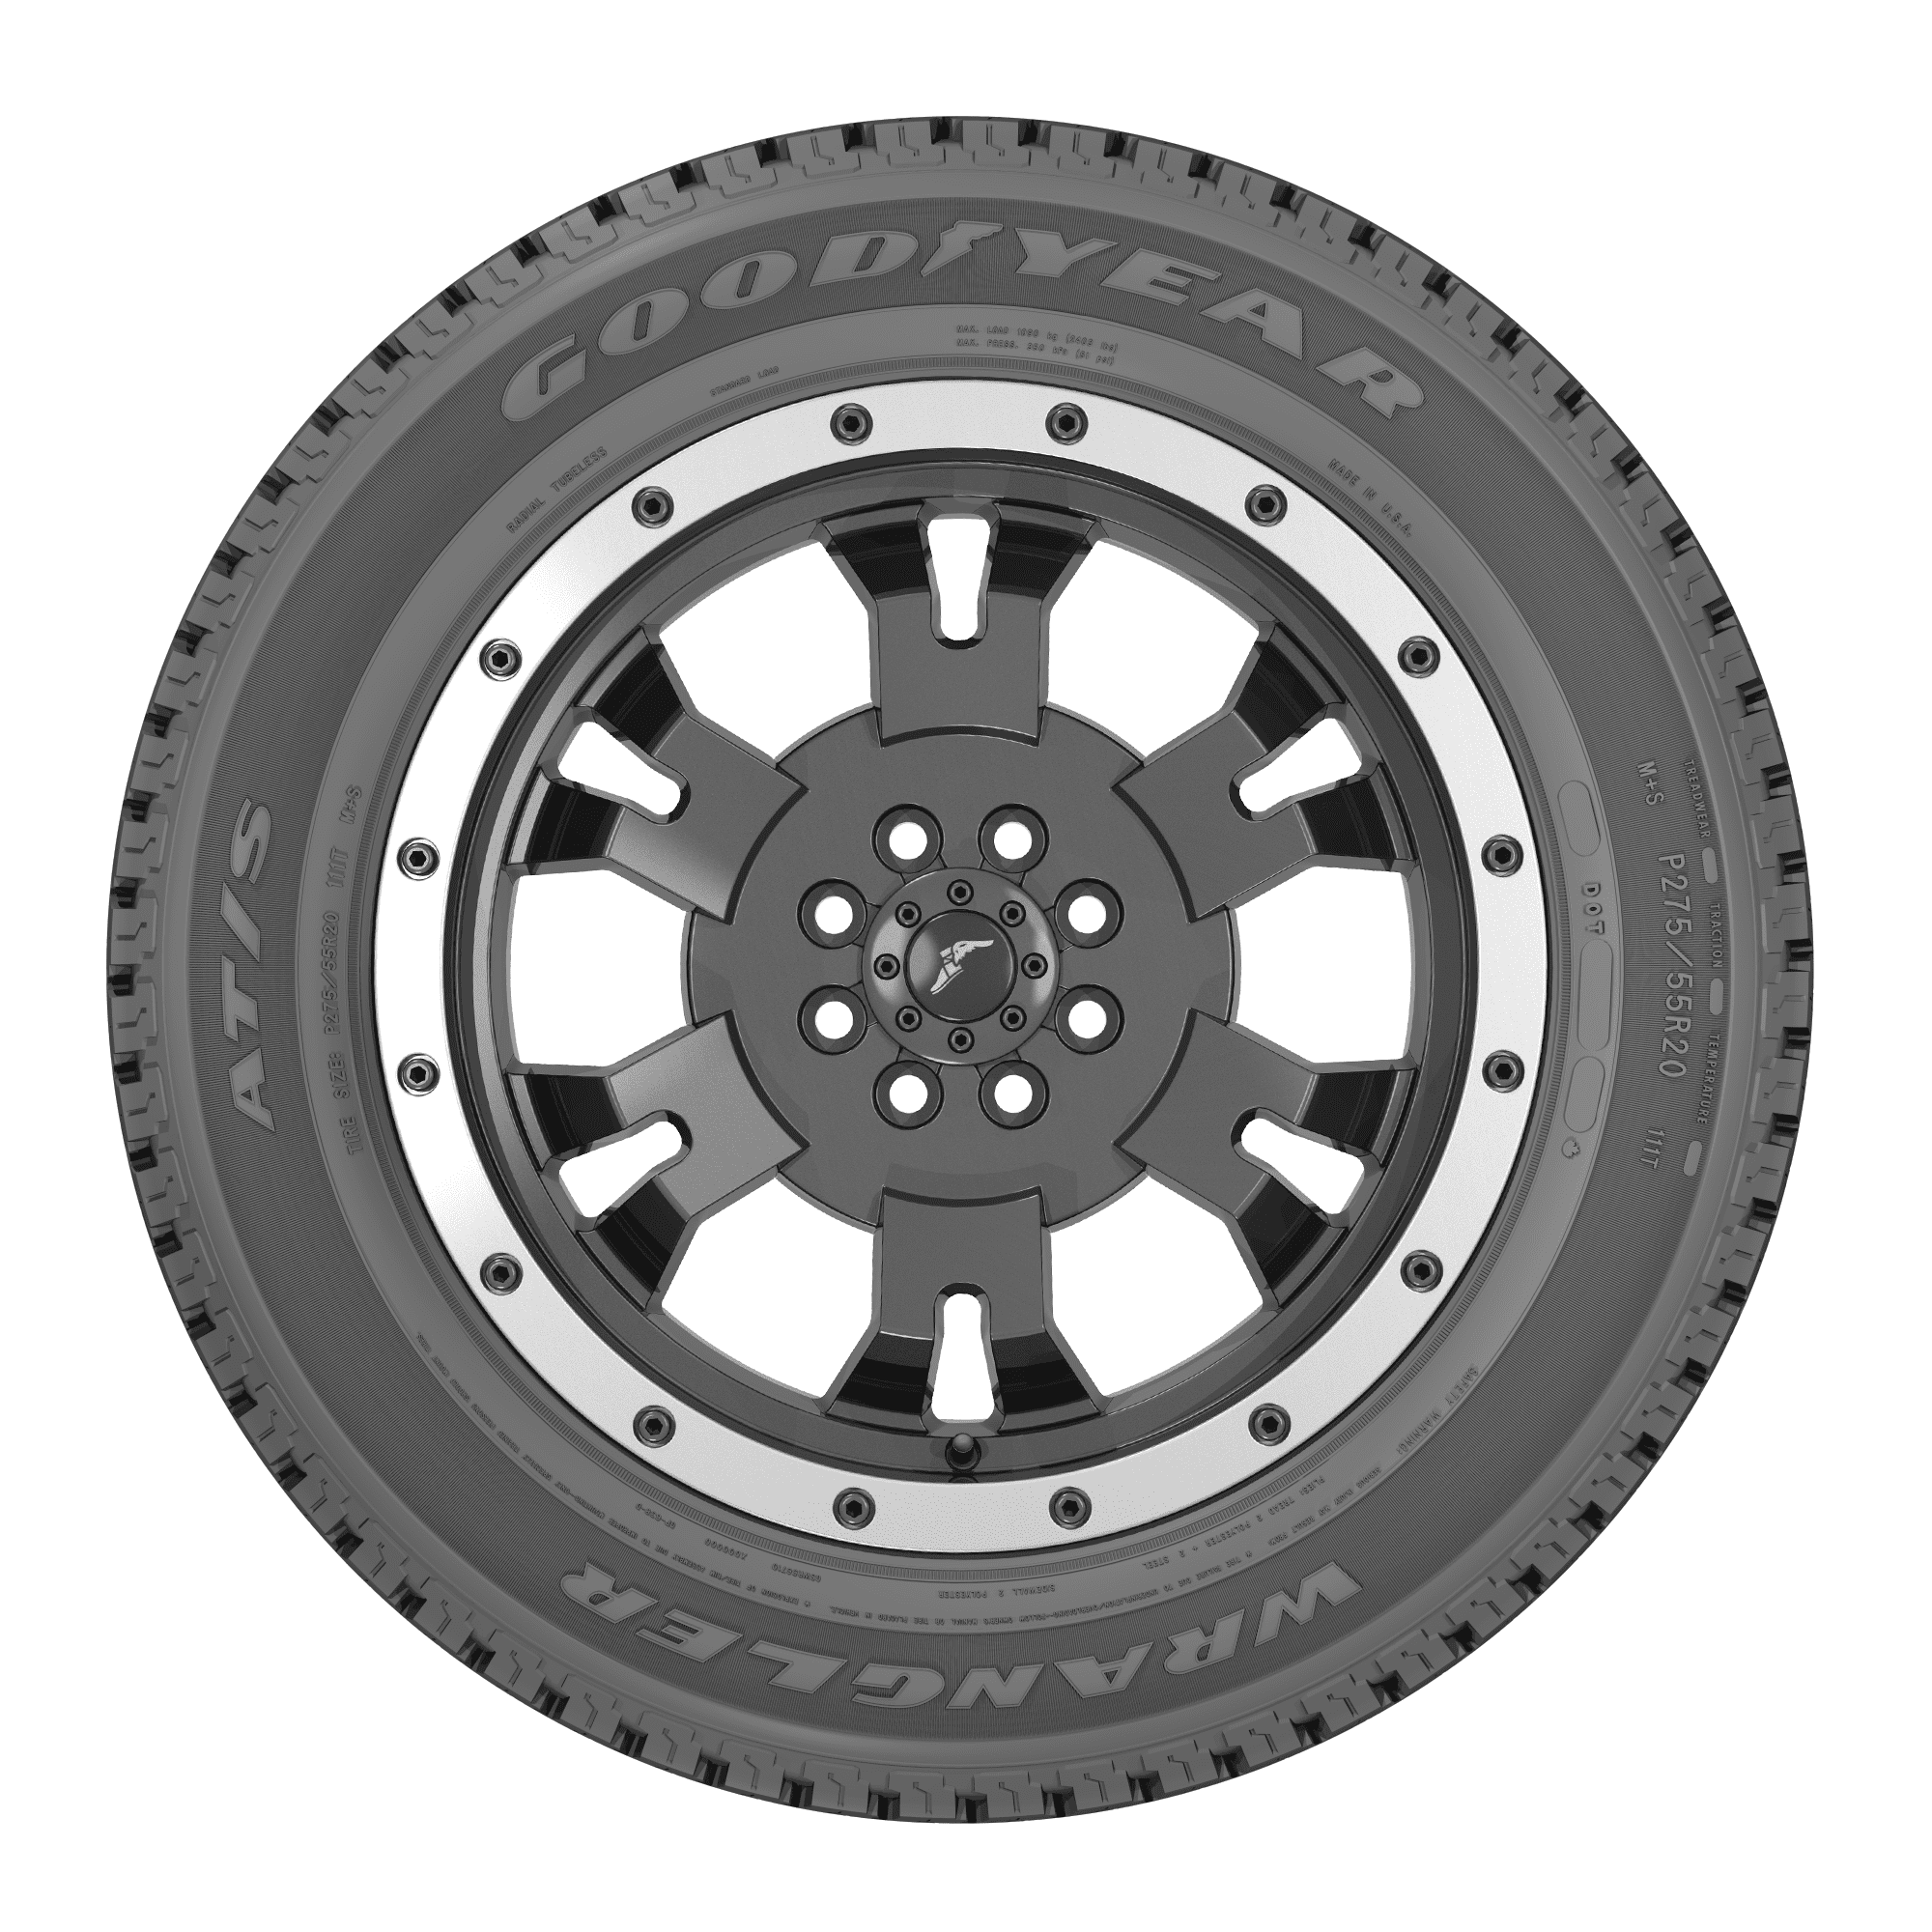 Goodyear Wrangler AT/S P275/55R20 111T SL TL tire 